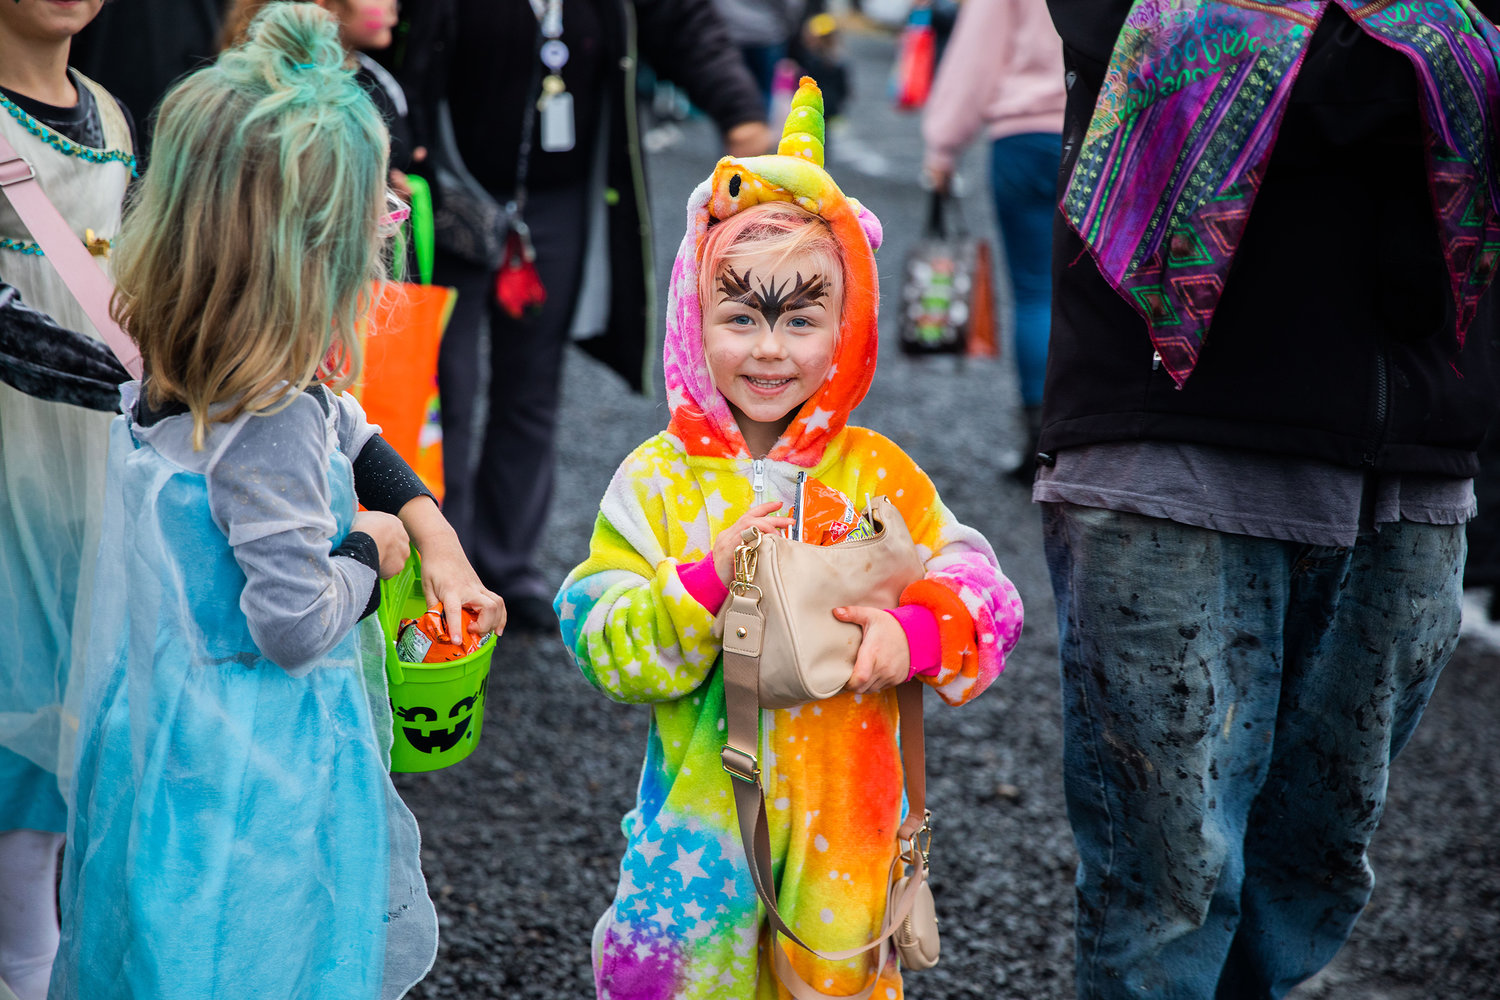 Zaysha Foley, 4, of Winlock smiles while holding a bag full of candy during Egg-O-Lantern festivities on Halloween.